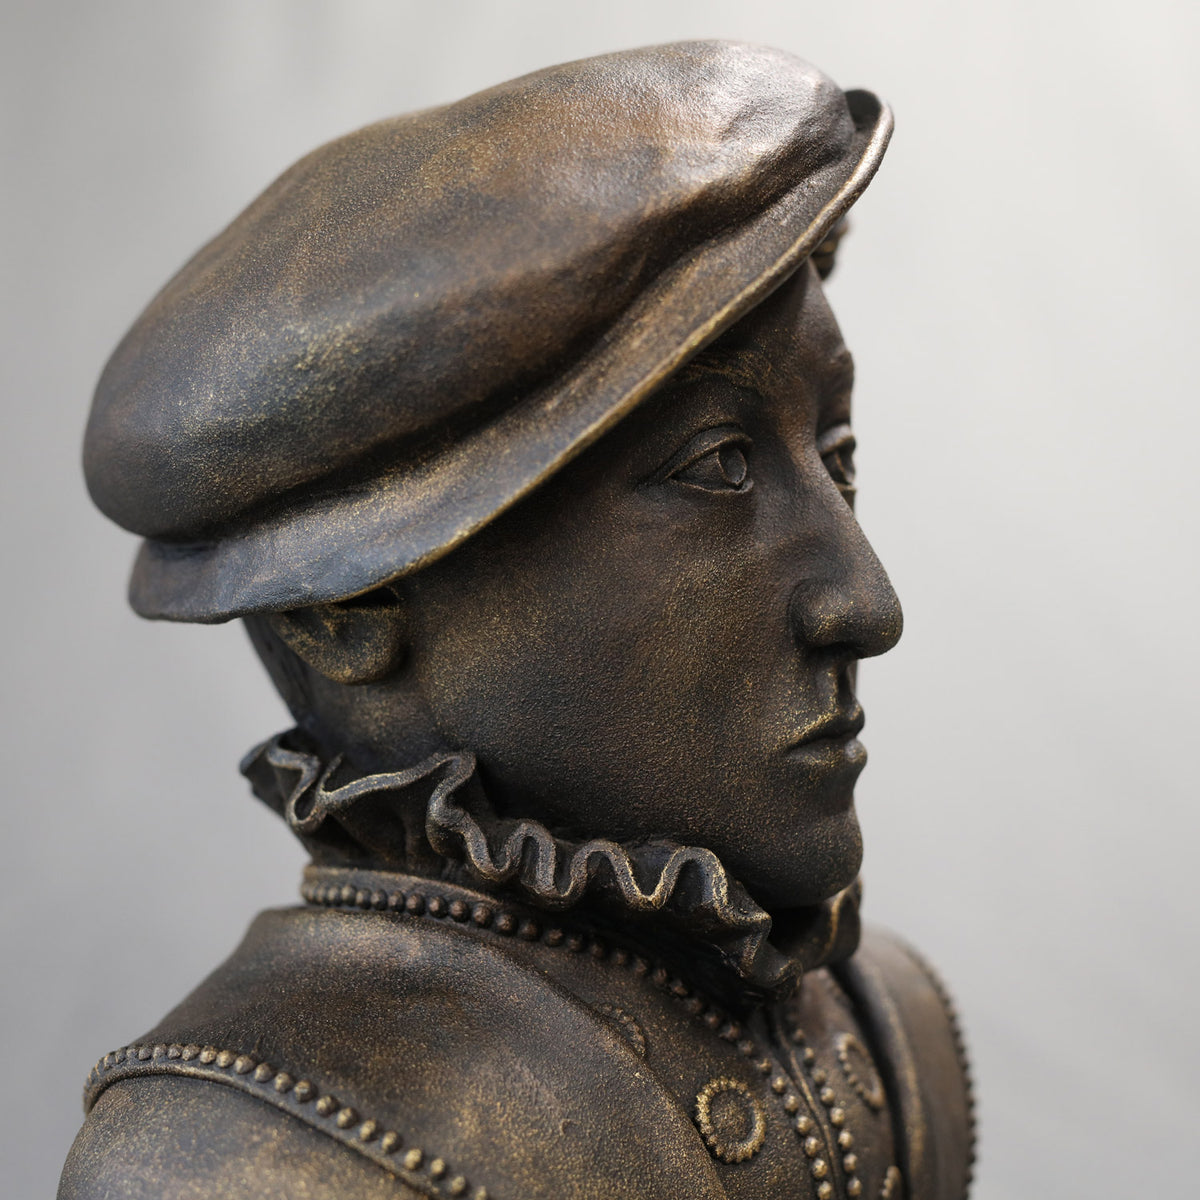 King Edward VI - Sculpture